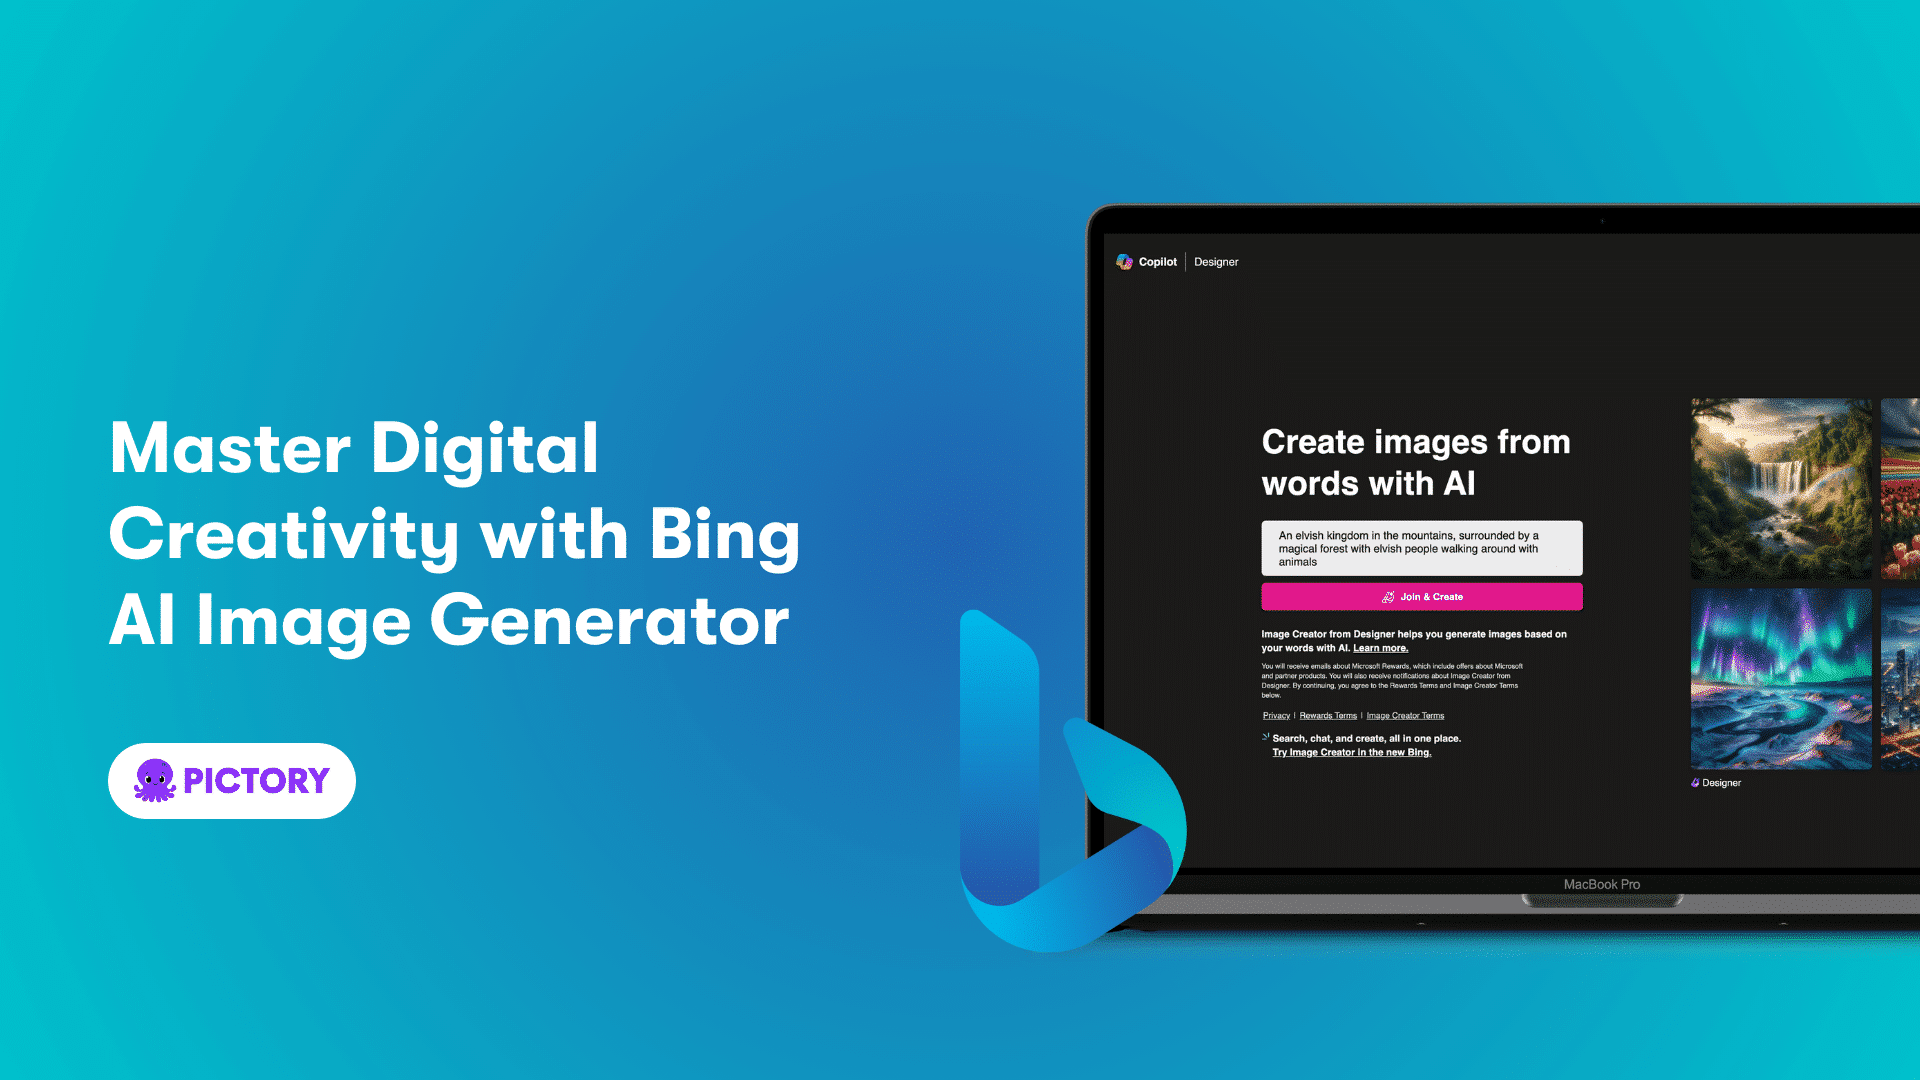 Microsoft Bing AI Image Generator